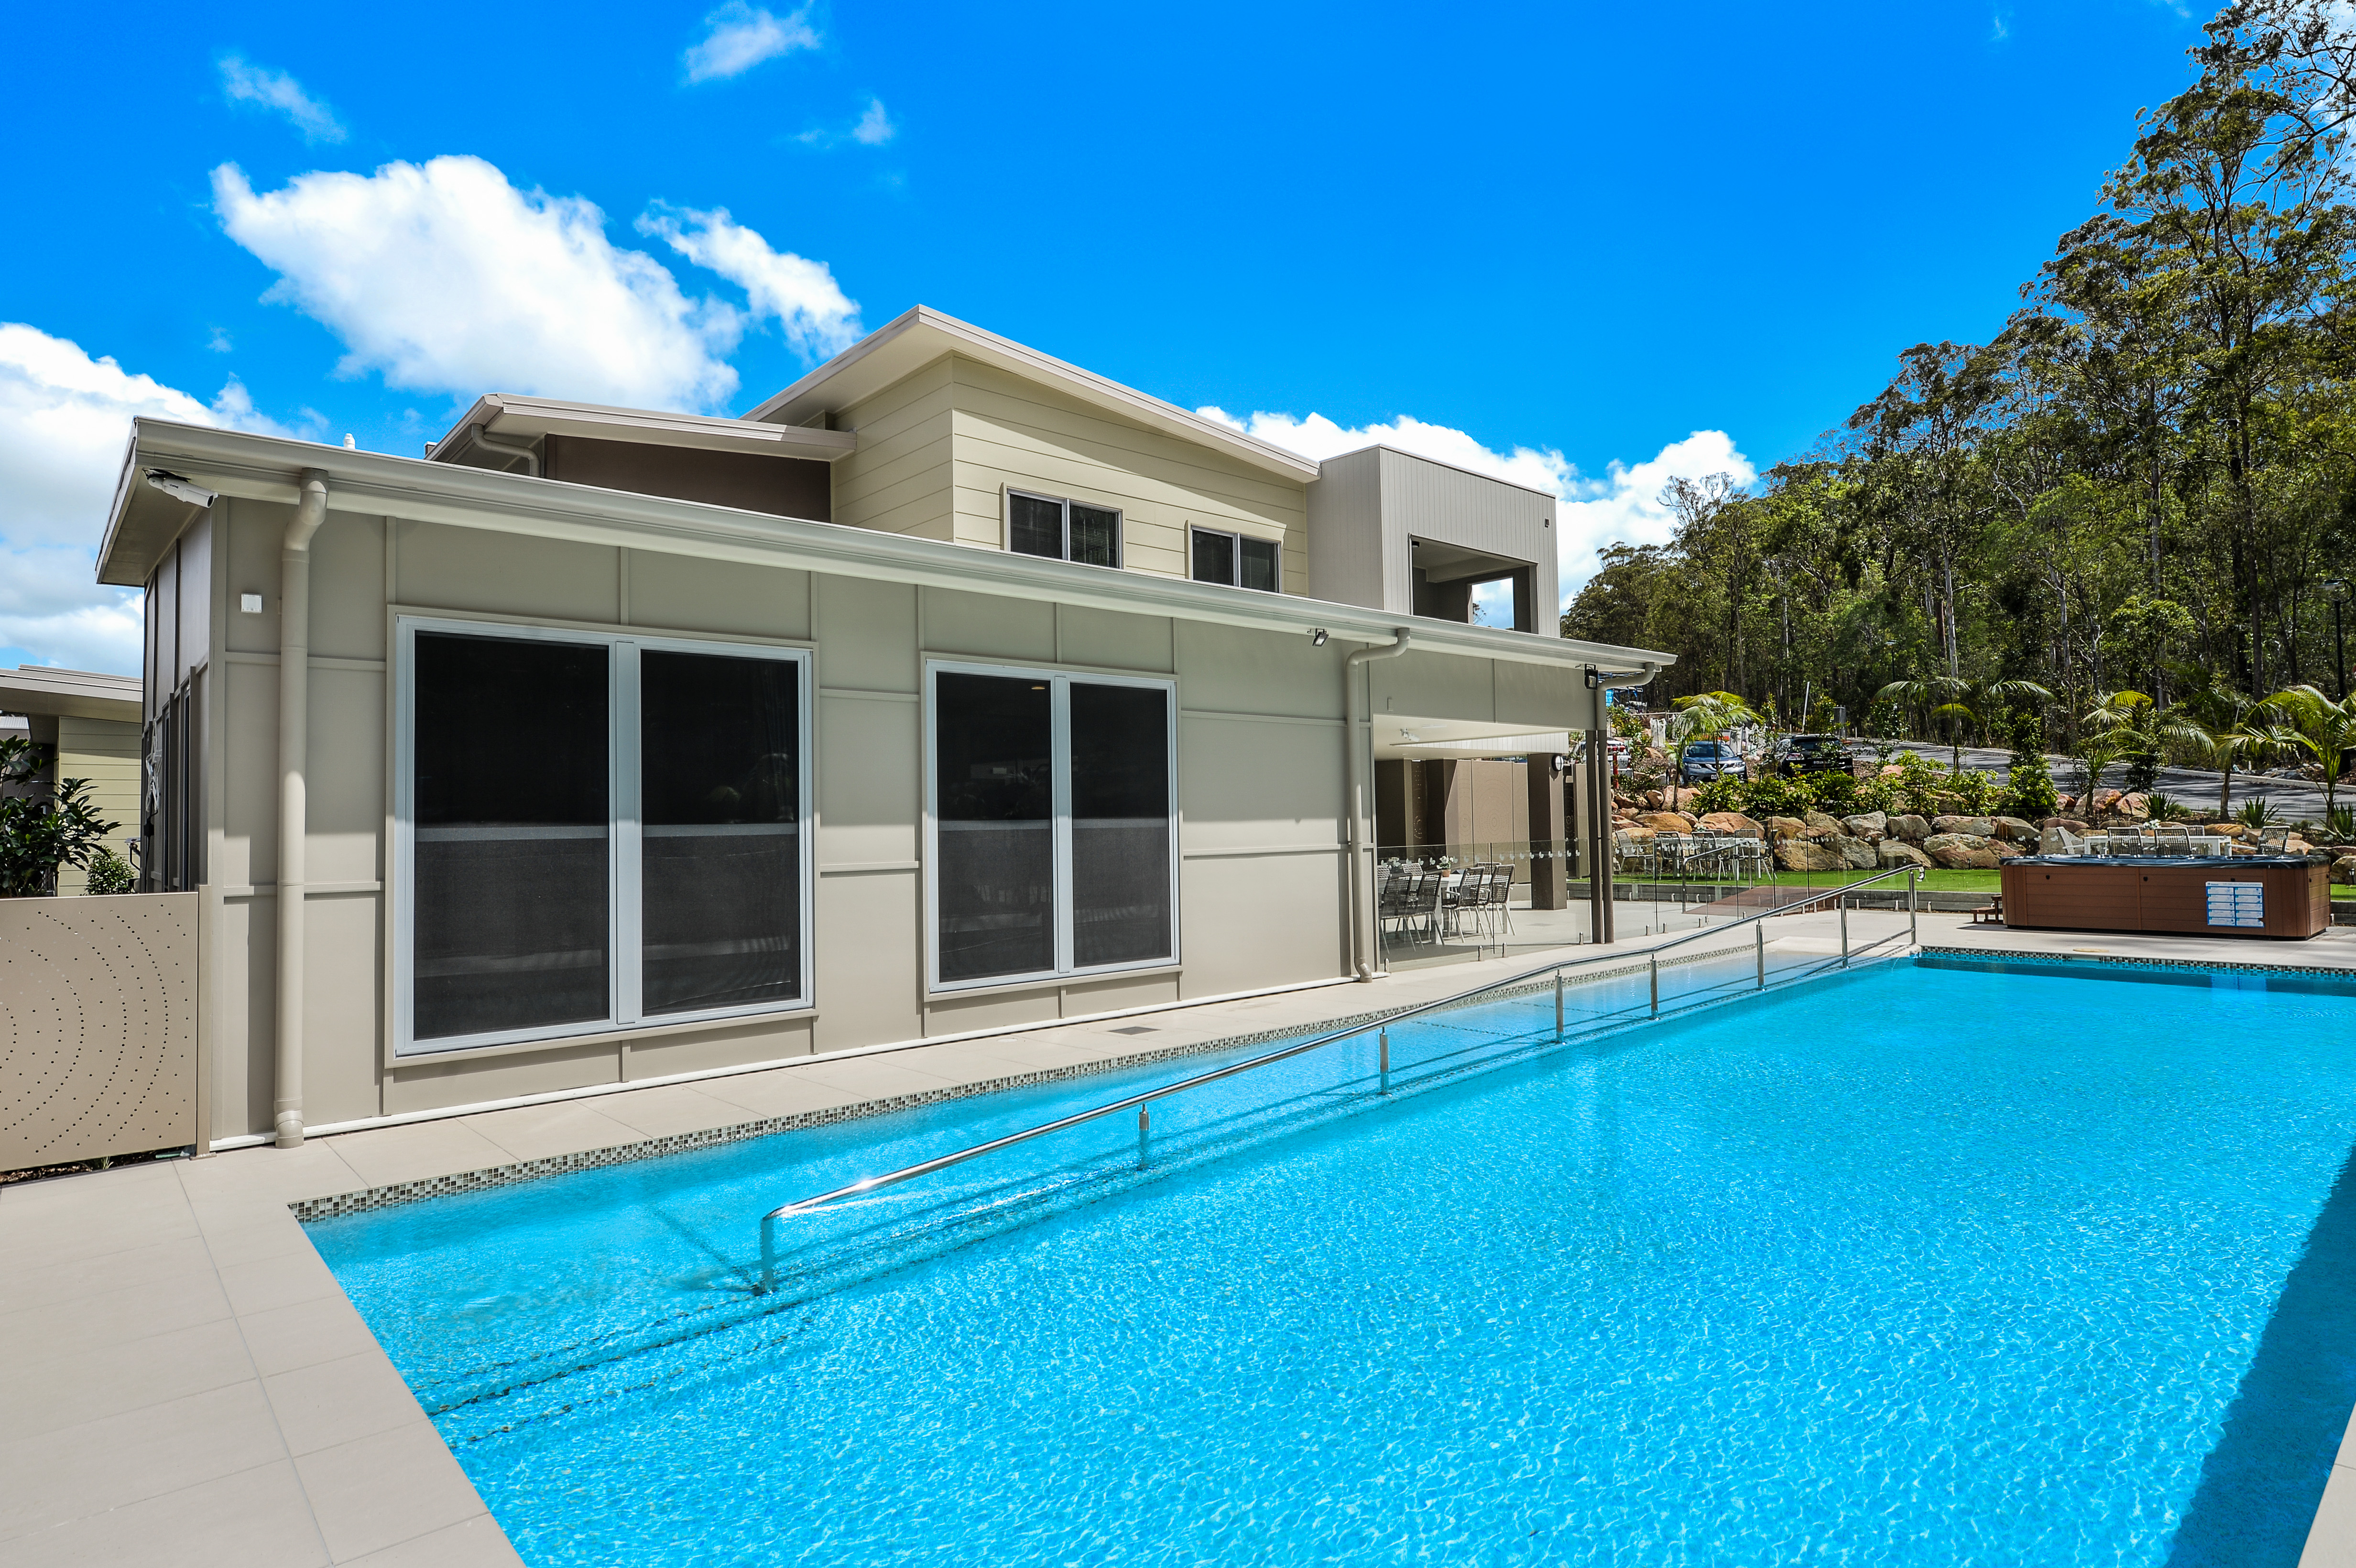 Luxury Retirement Homes Brisbane - Elements Retirement Living